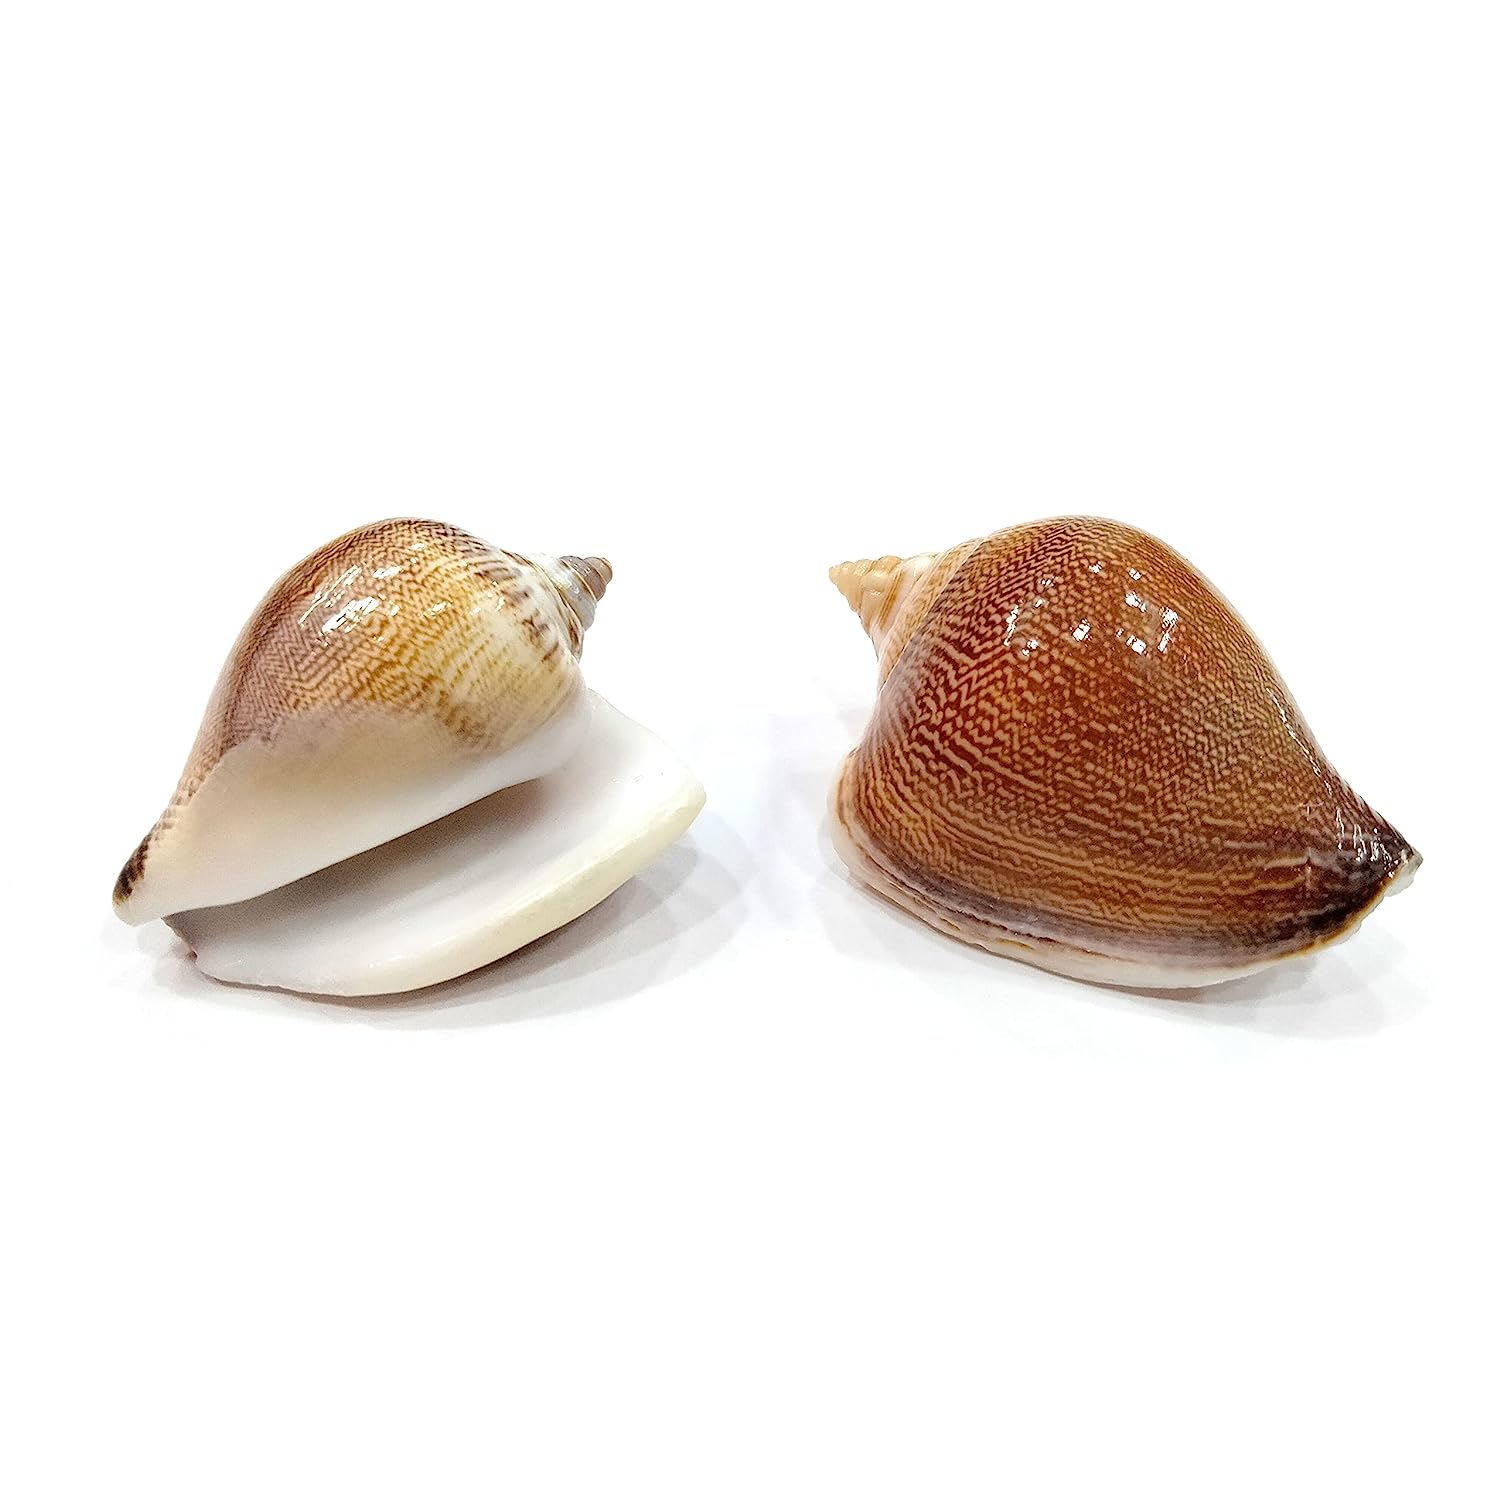 Seashell Arts and Crafts - Viranjan - Dog Conch - Laevistrombus Canarium - Pack of 20